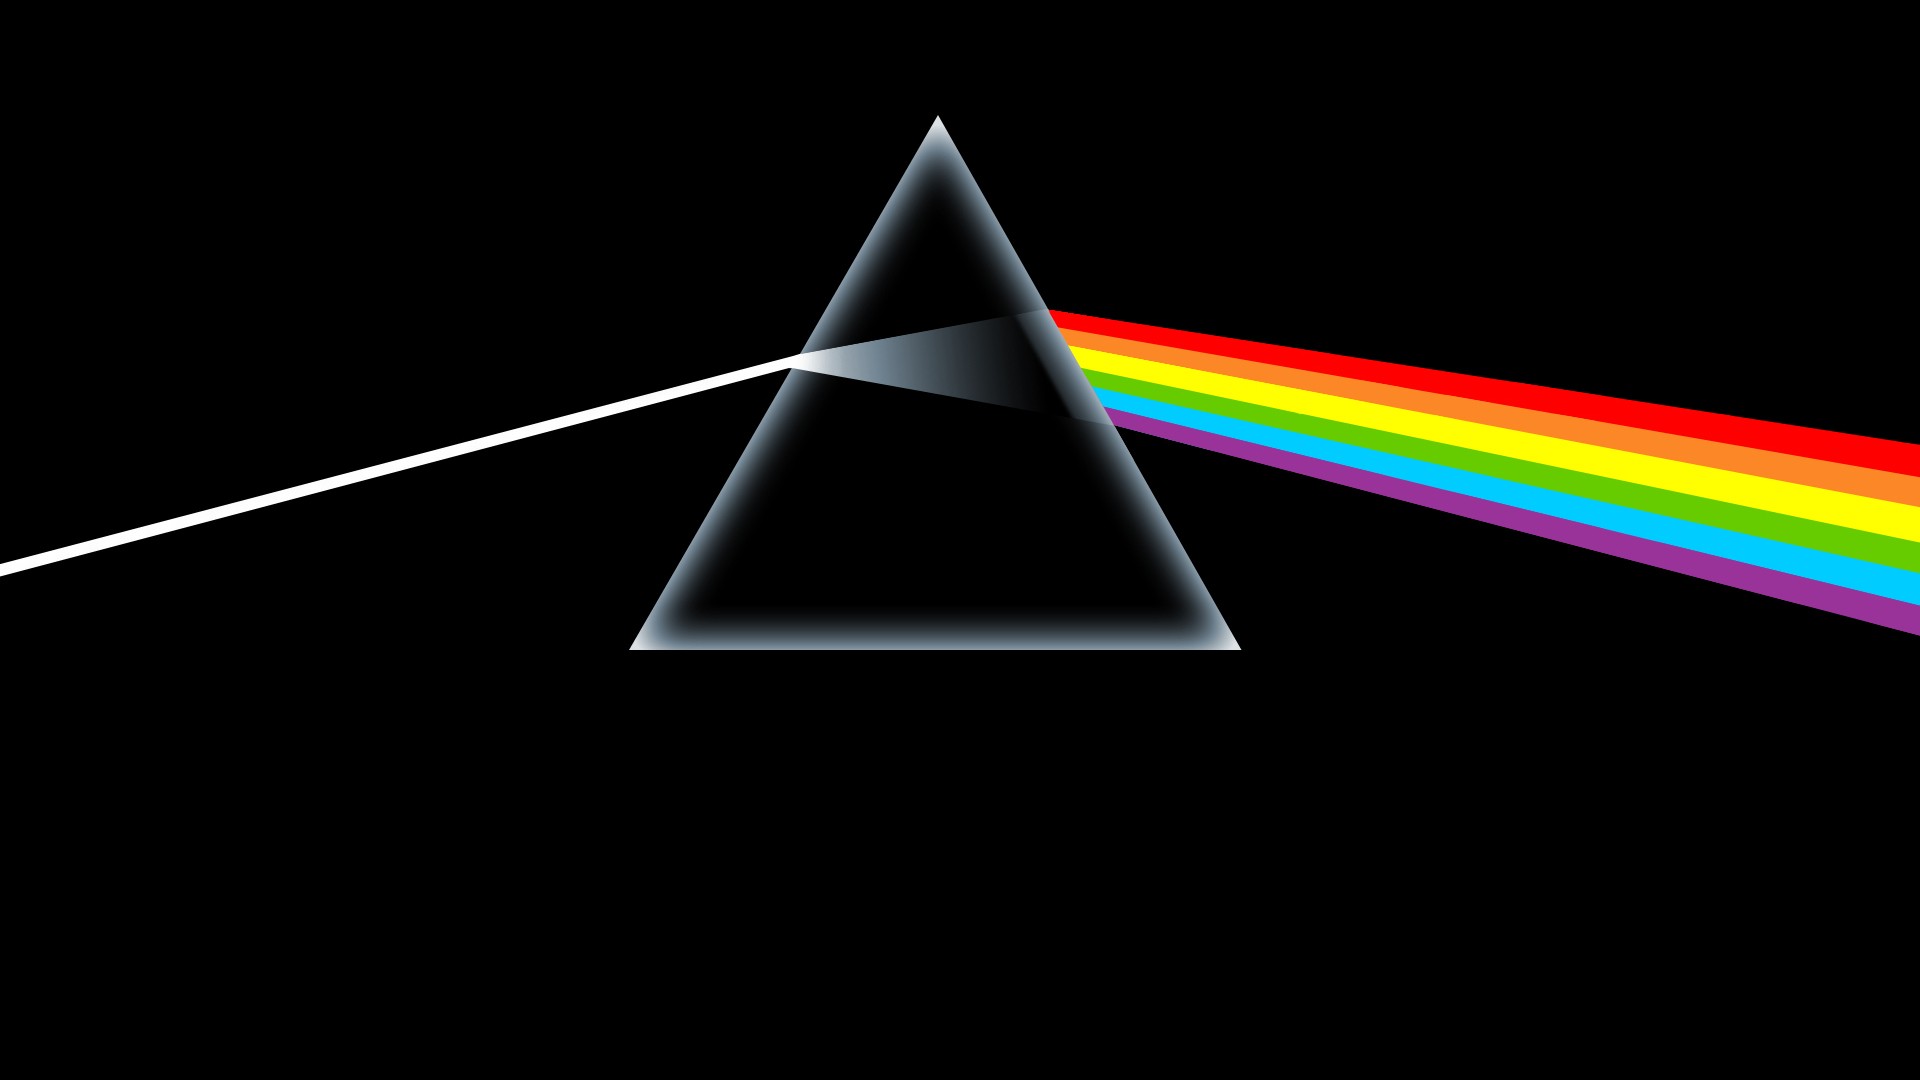 Pink Floyd, Prism, Album Covers, Cover Art Wallpaper